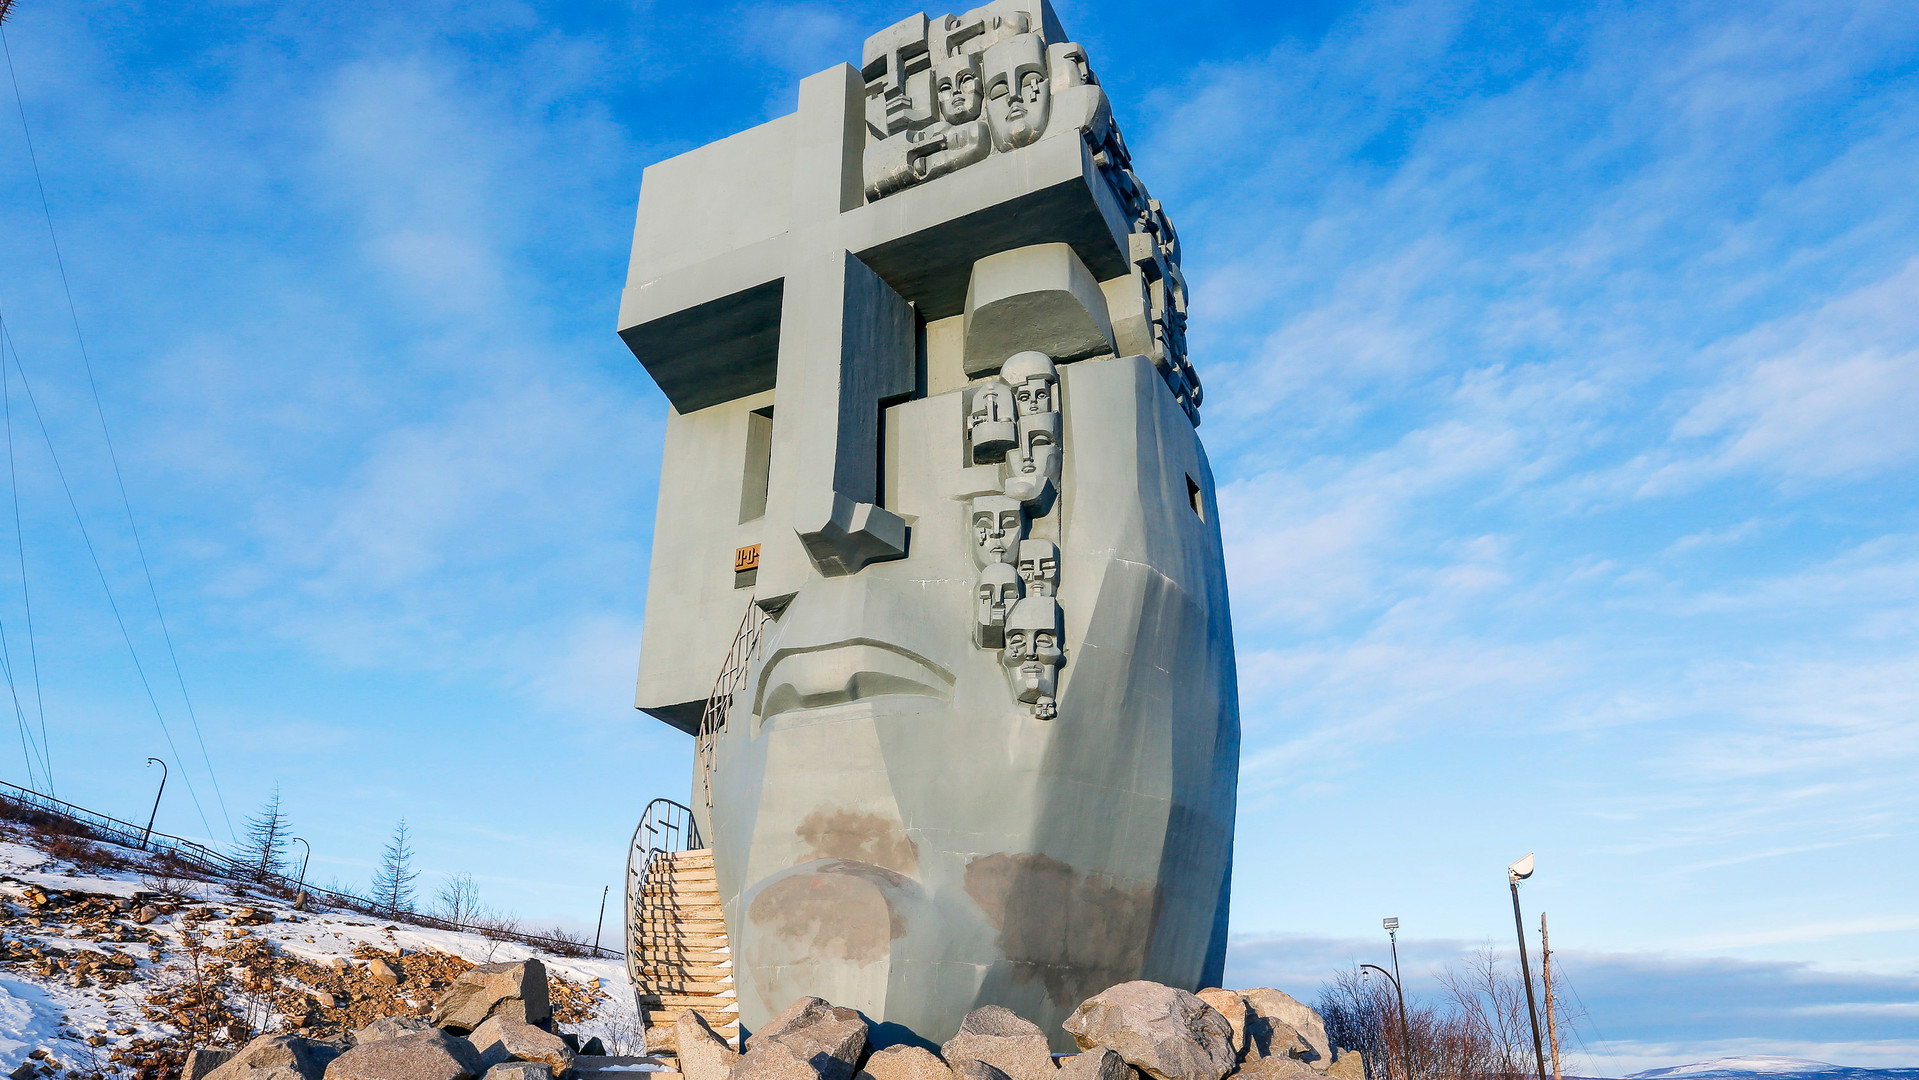 The Mask of Sorrow memorial in Magadan commemorating victims of political repression.